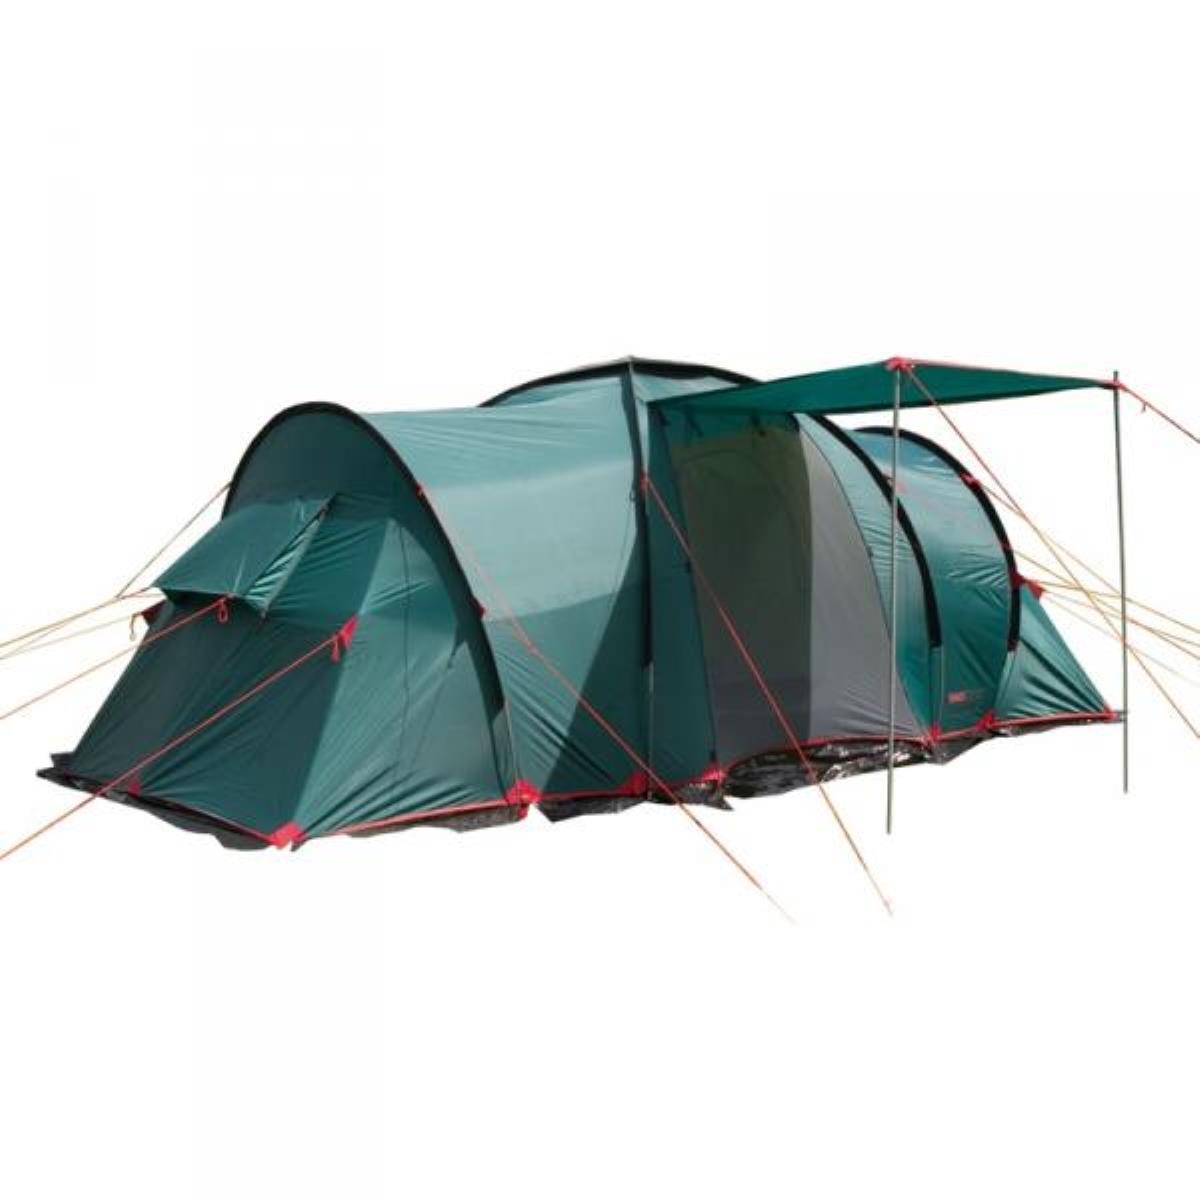 Палатка Ruswell 6 (T0270)  BTrace палатка trimm trekking frontier песочный 2 1 44127